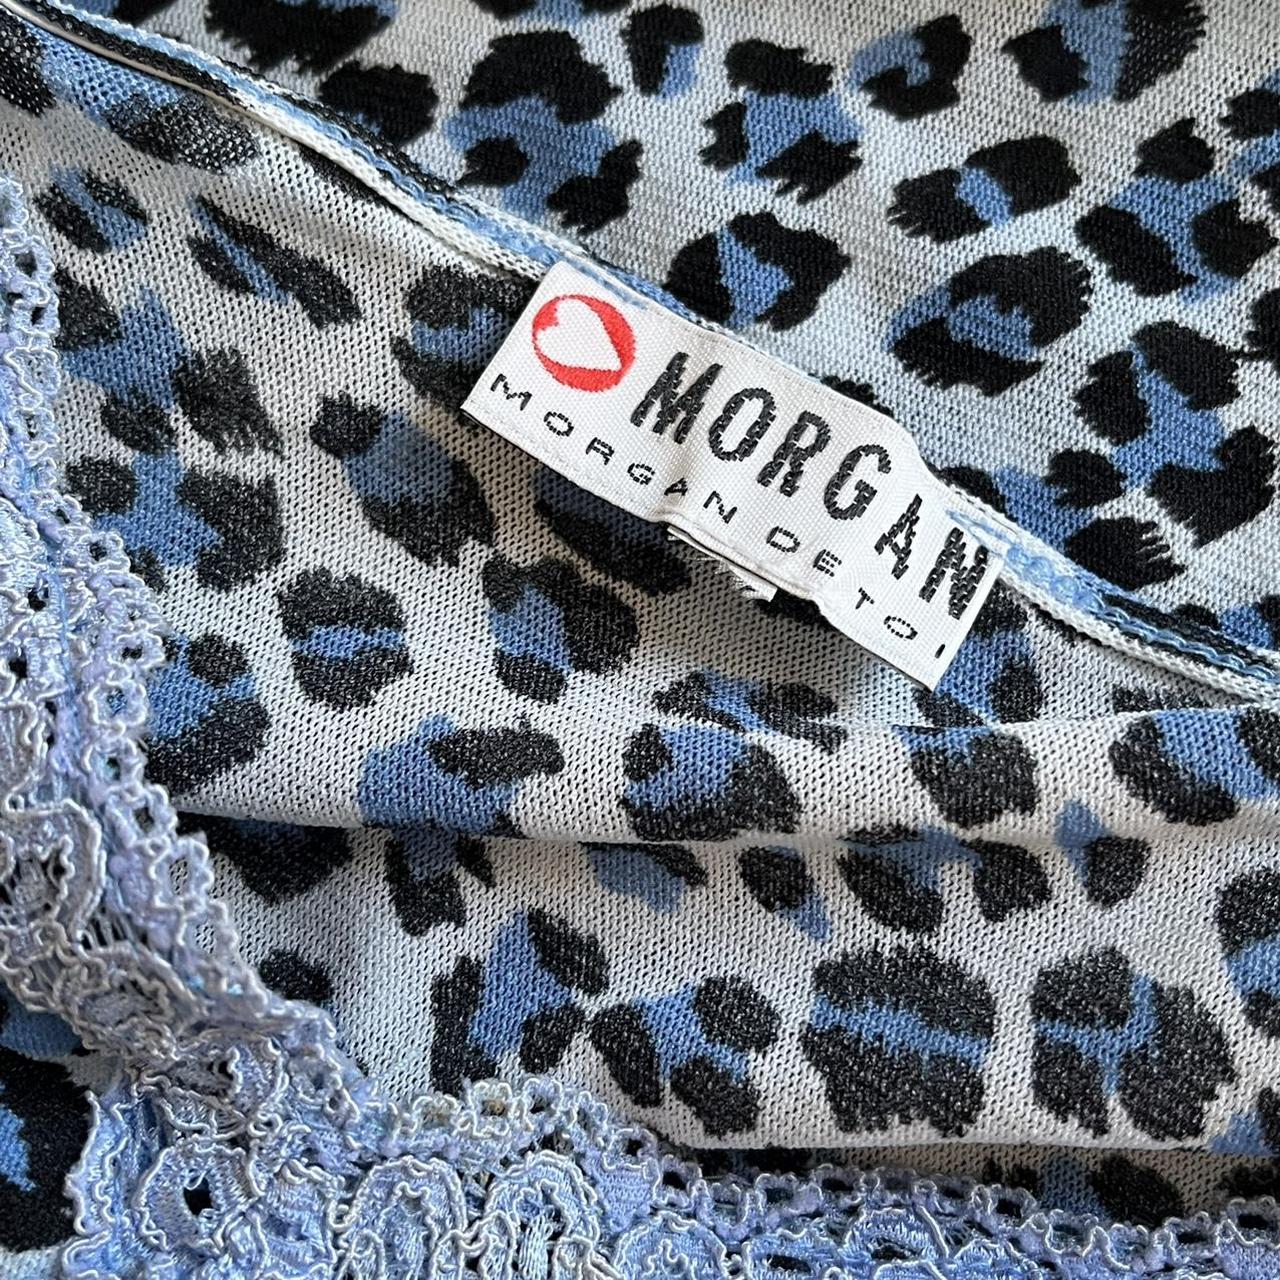 Product Image 4 - Morgan de toi cheetah print